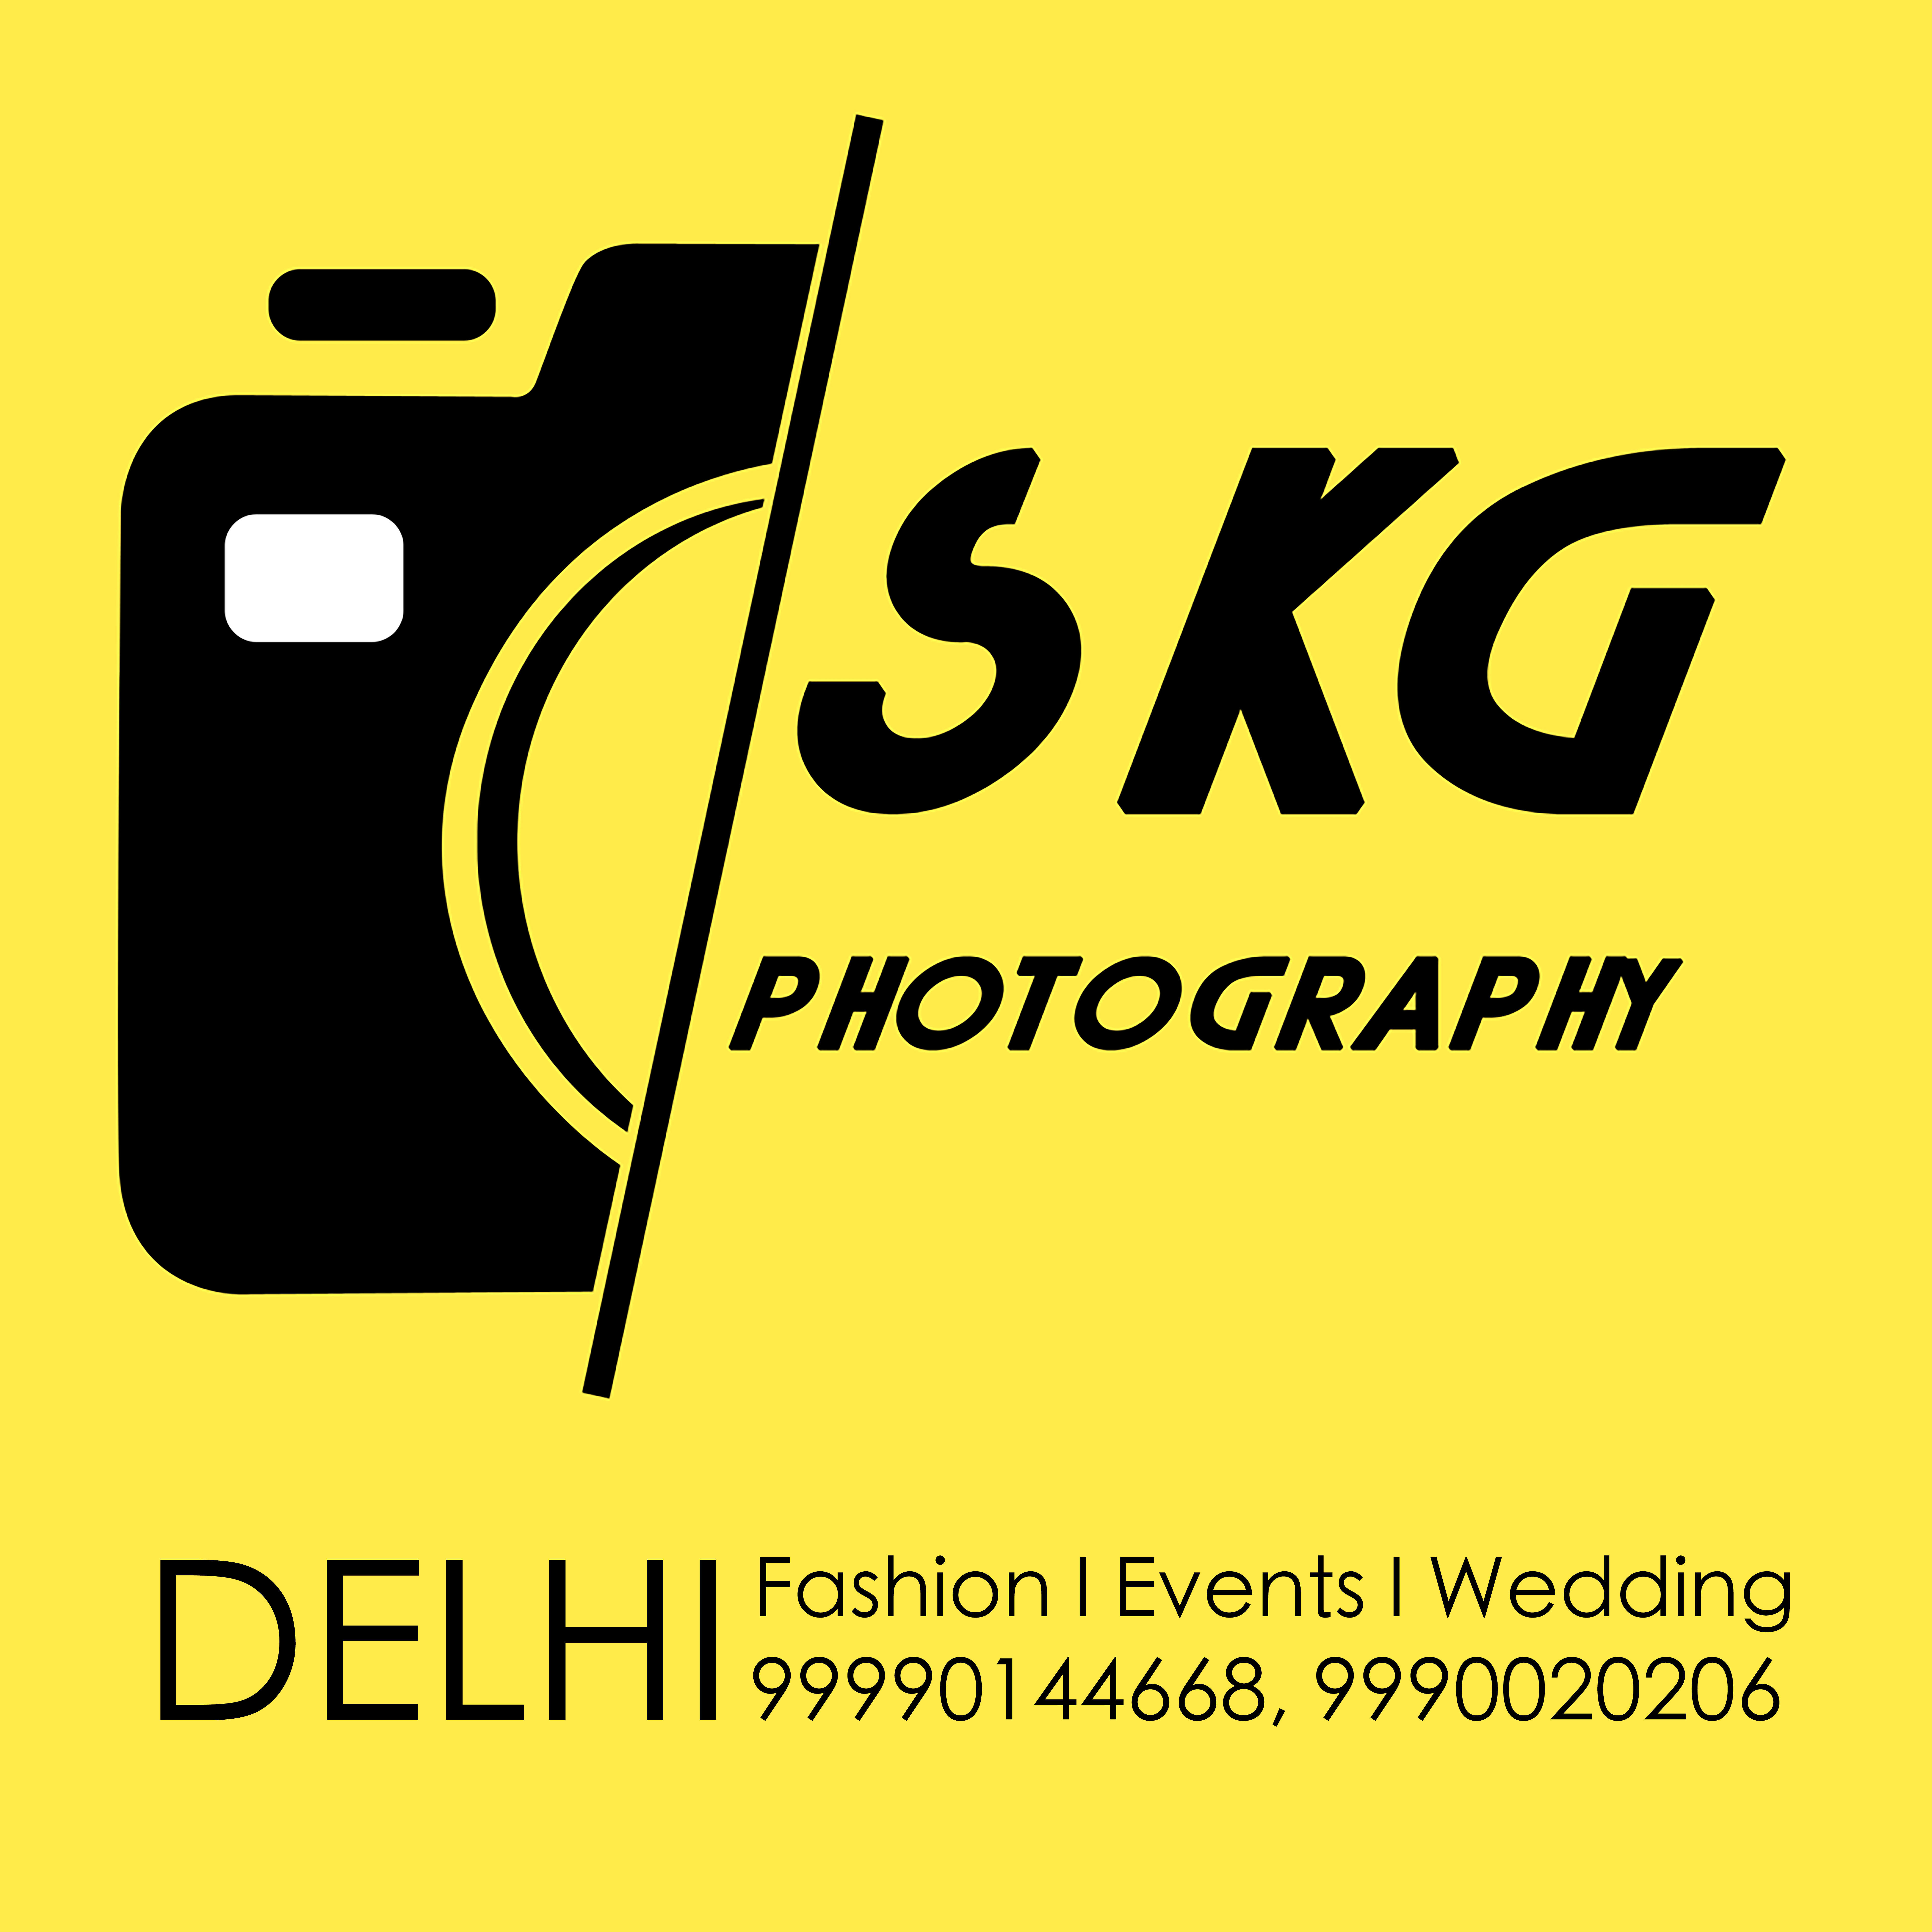 SKG Photography